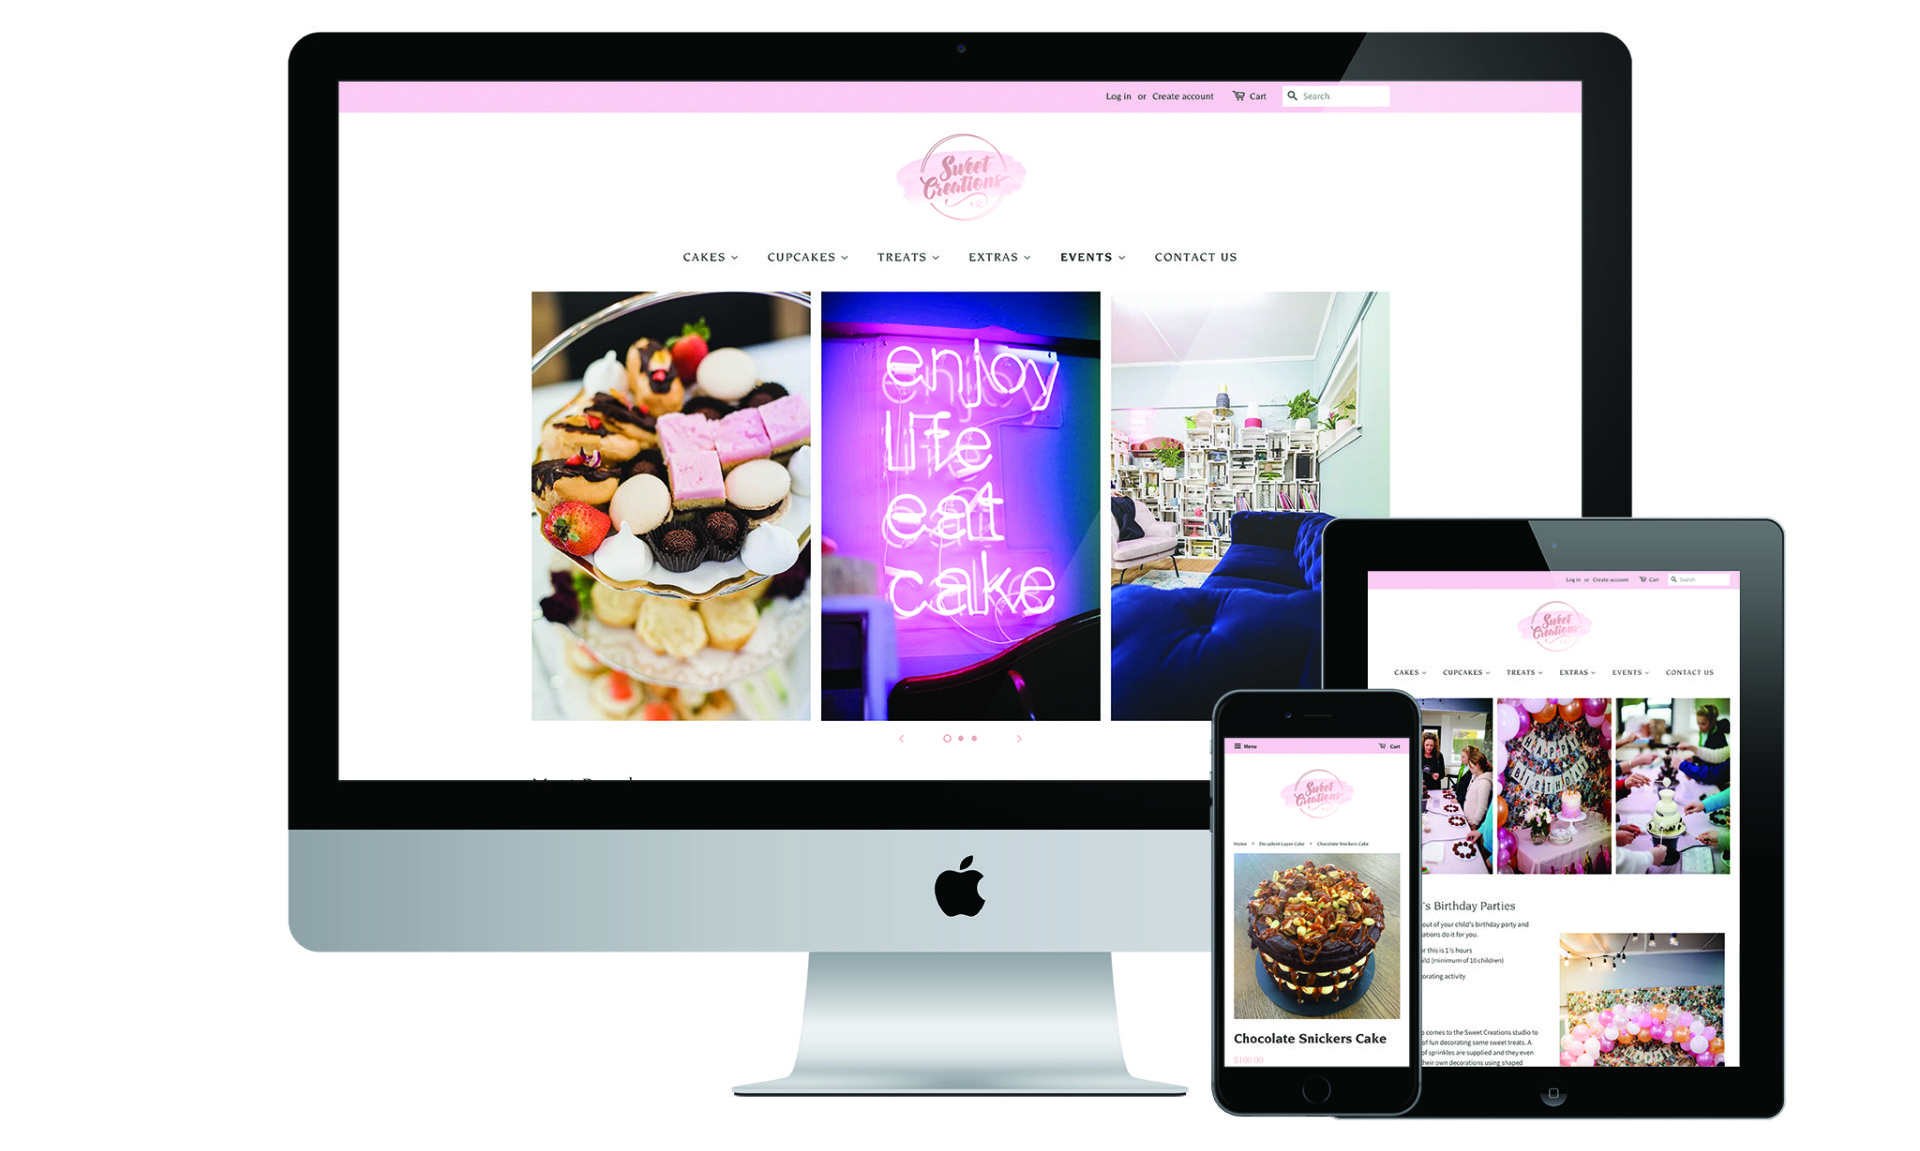 Sweet Creations website designed by Vanilla Hayes creative graphic design  studio in Blenheim, Marlborough, New Zealand